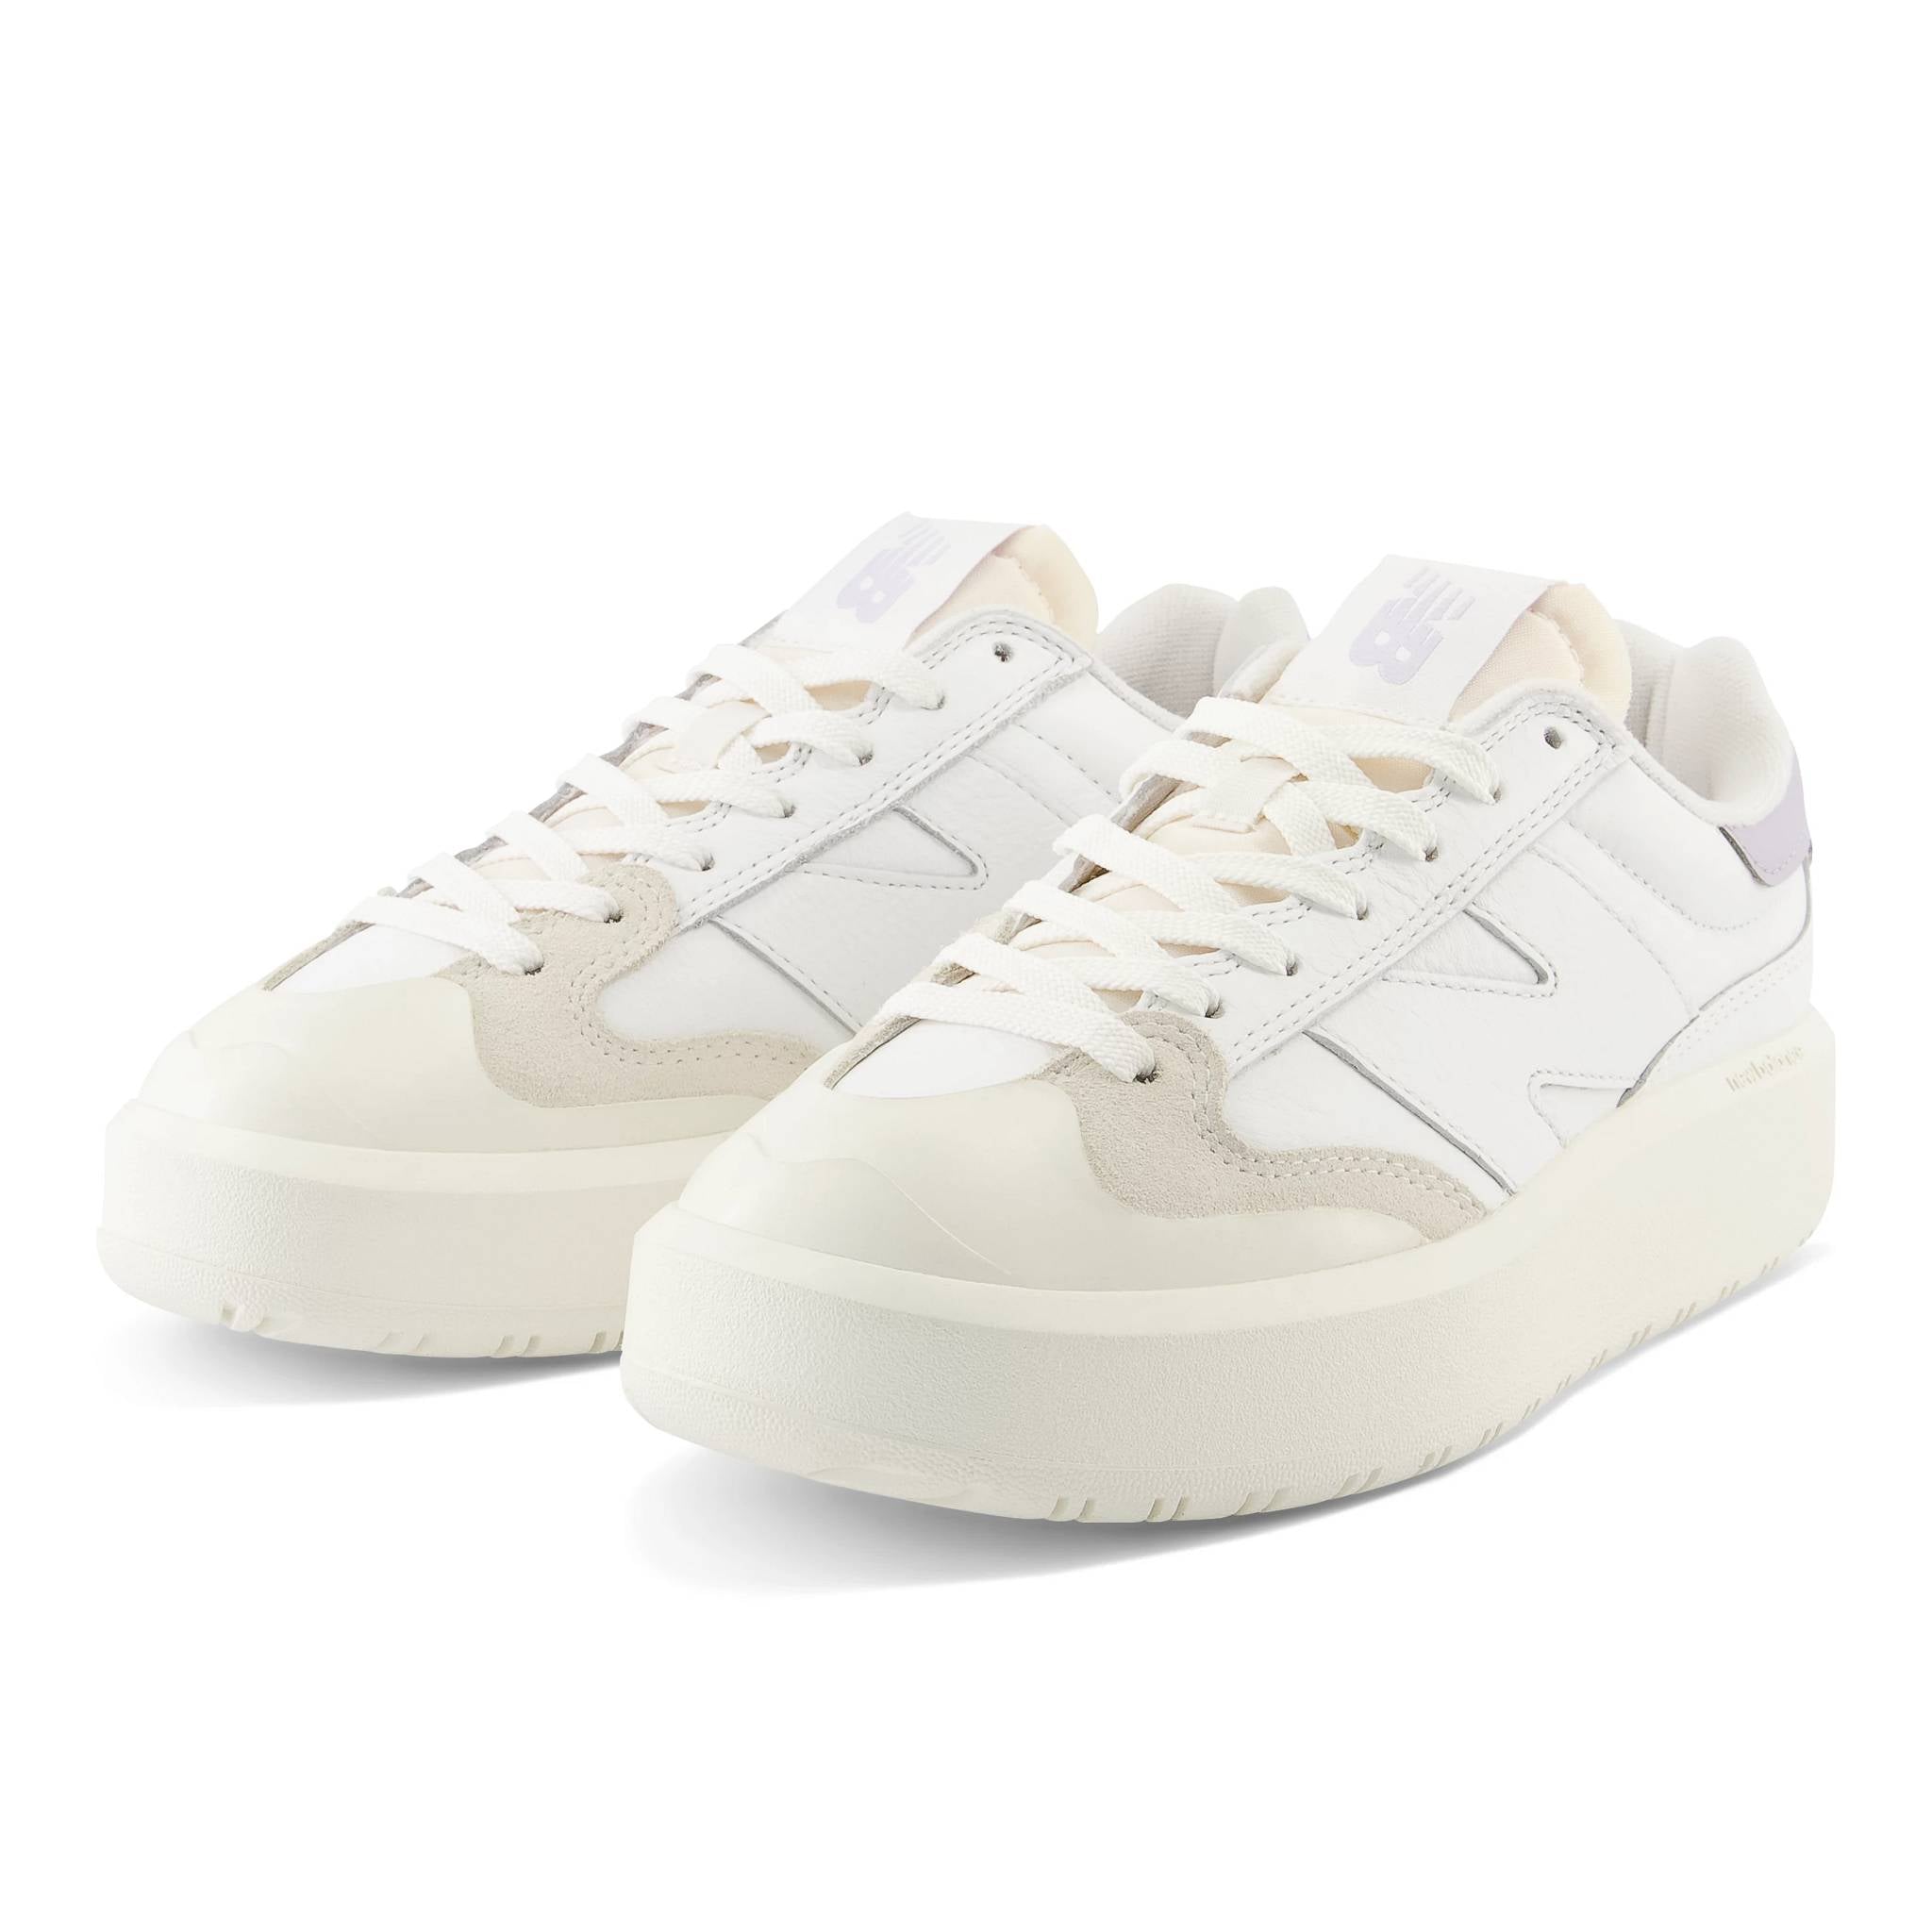 NEW BALANCE CT302SL sneaker - White/Grey Violet